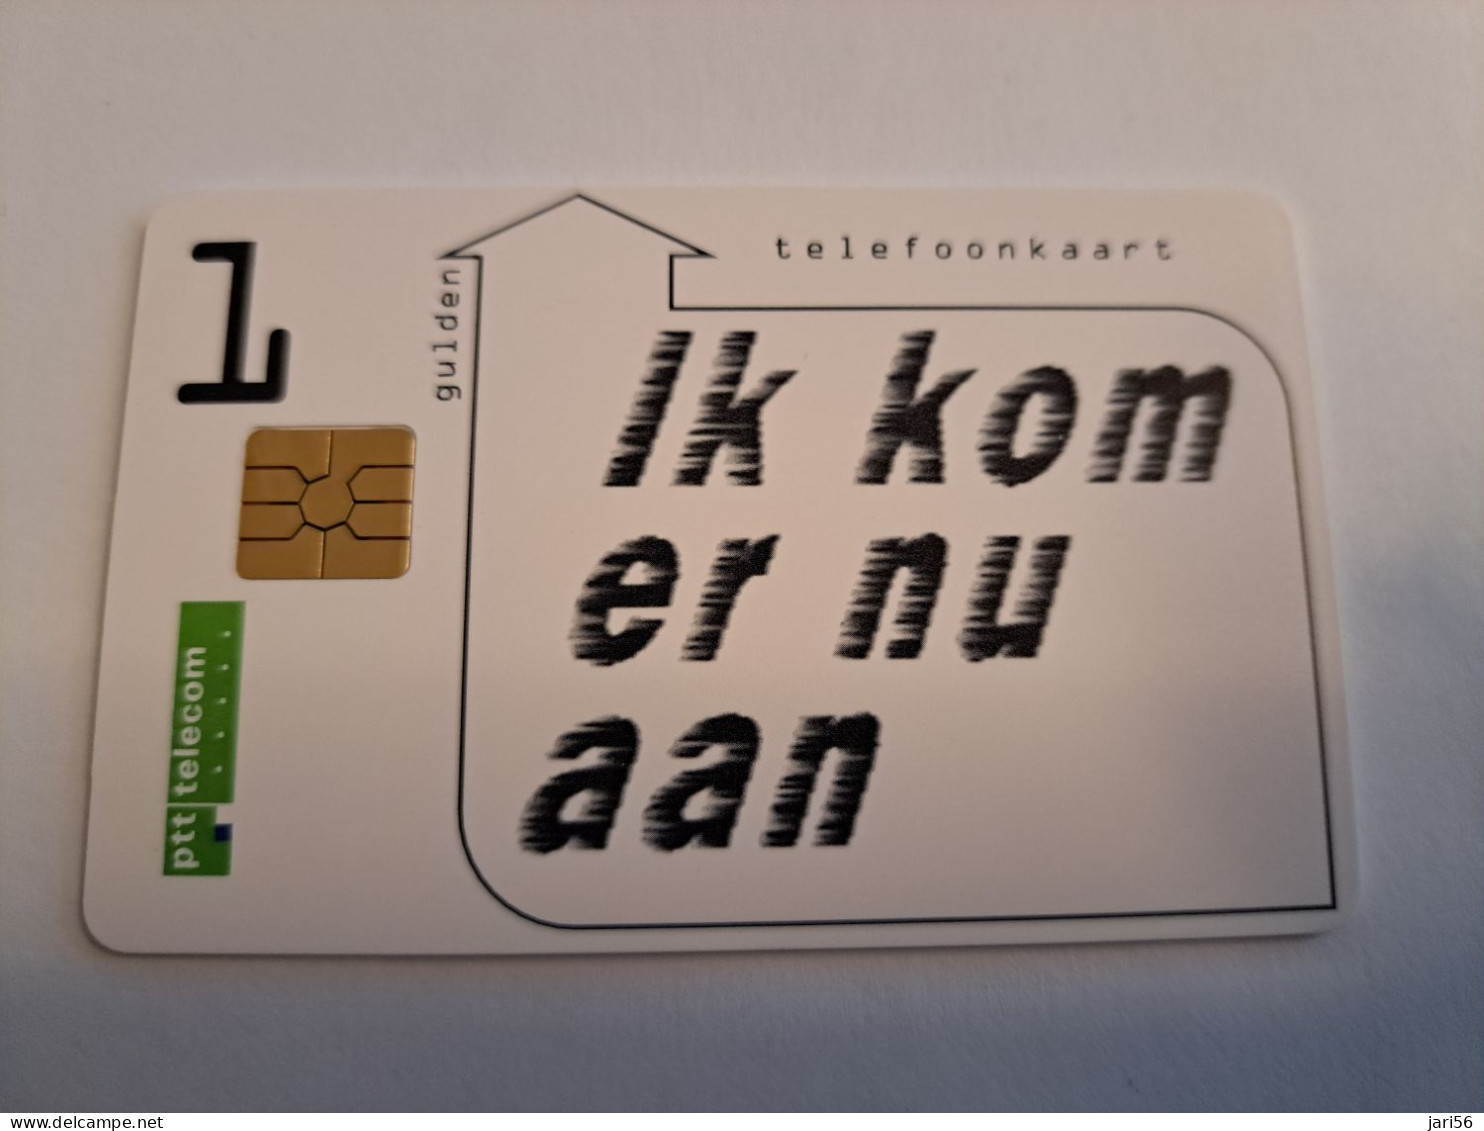 NETHERLANDS  HFL 1,00    CC  MINT CHIP CARD   / COMPLIMENTSCARD / FROM SERIE / MINT   ** 15953** - [3] Tarjetas Móvil, Prepagadas Y Recargos